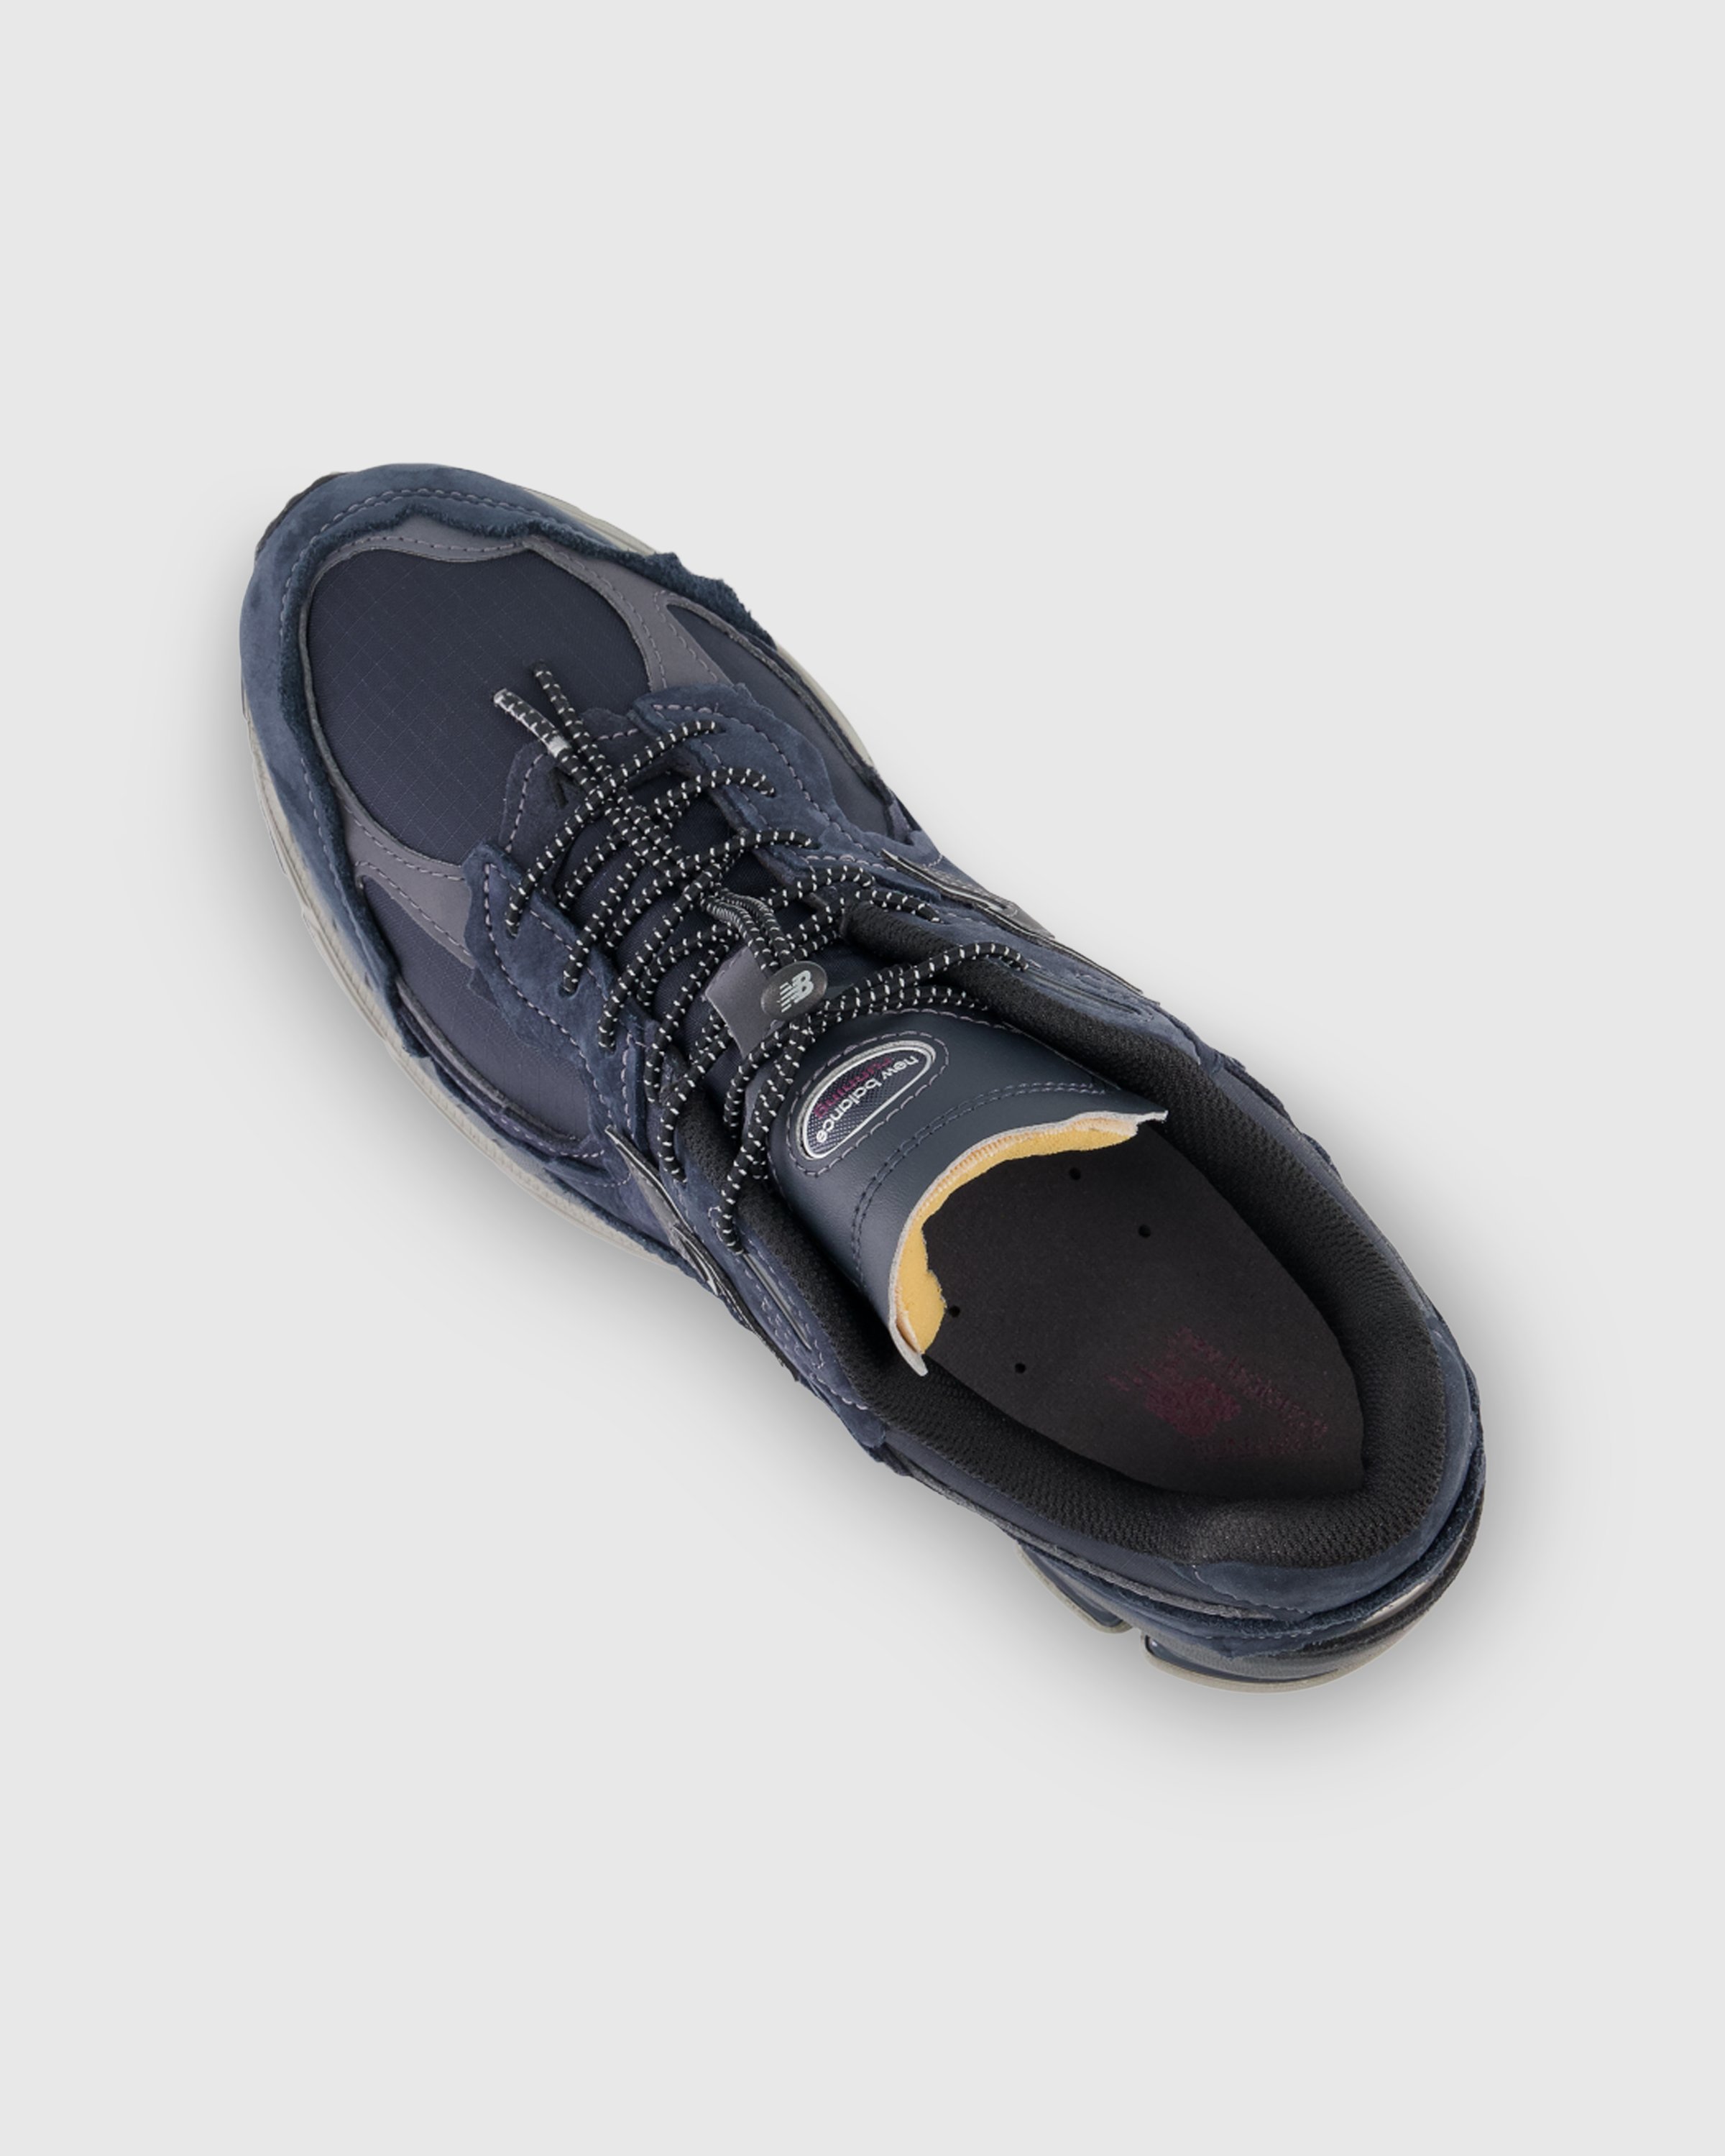 New Balance - M2002RDO Eclipse - Footwear - Blue - Image 4